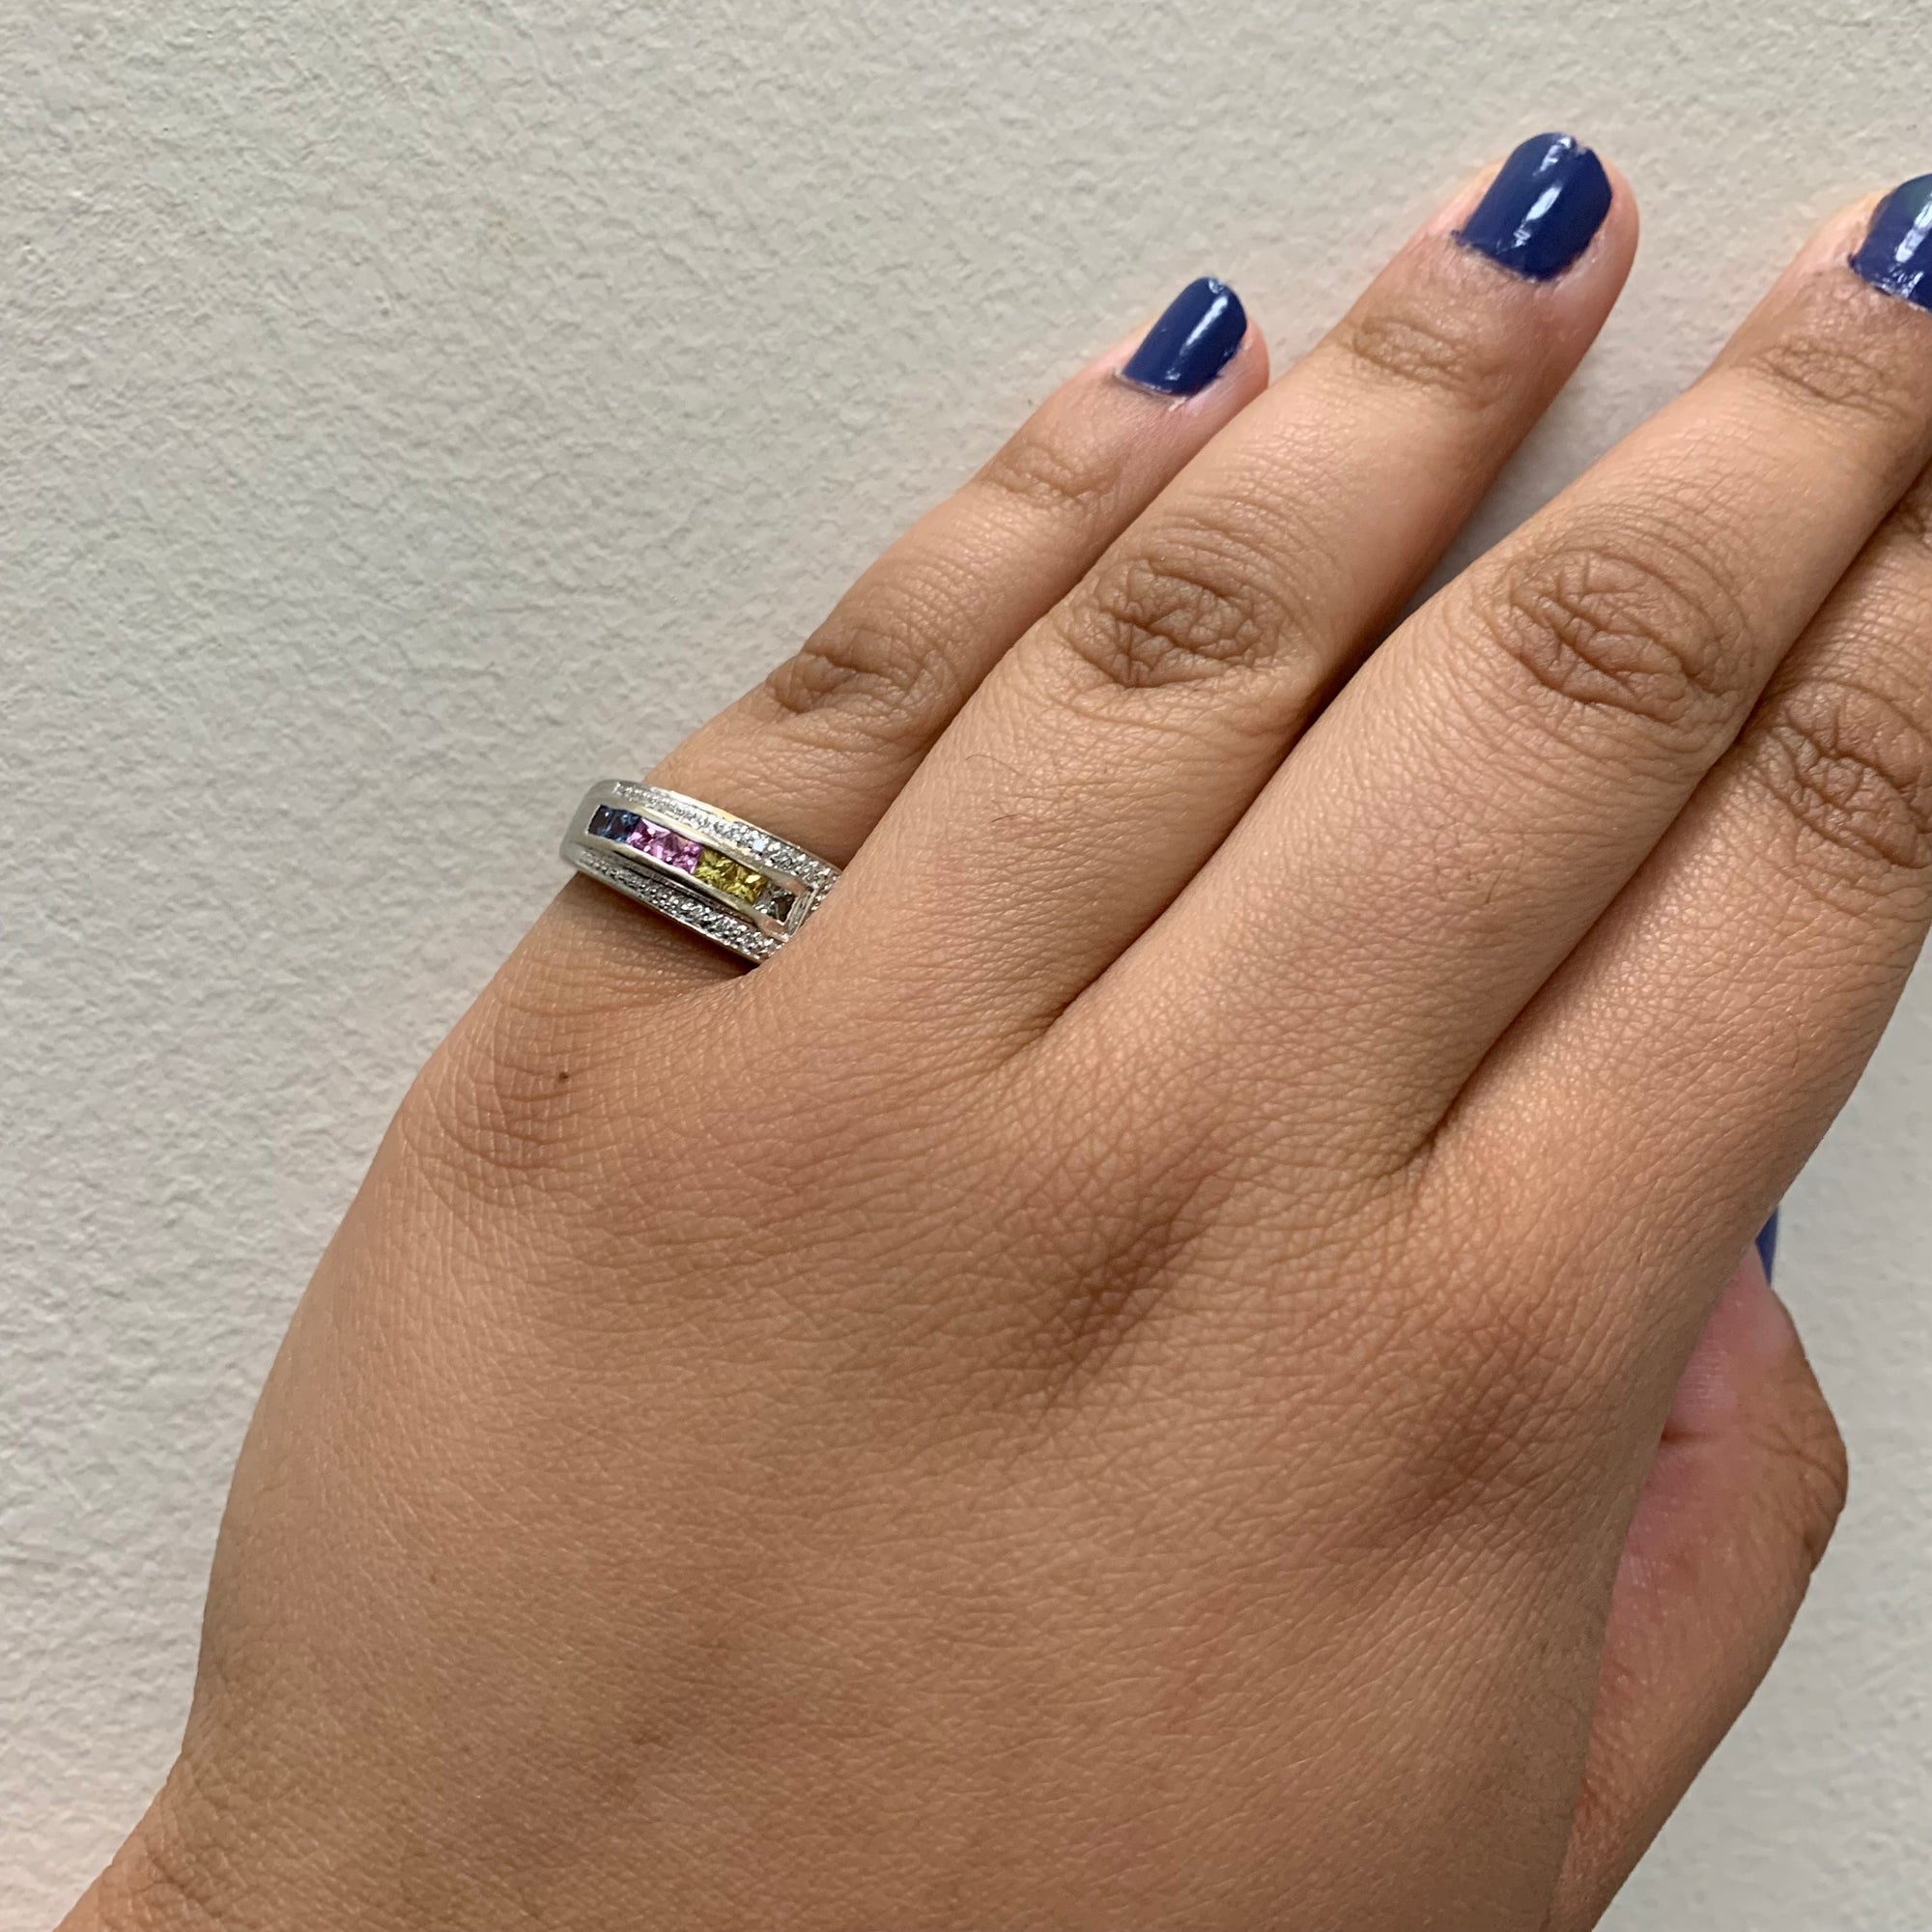 Multi Colour Sapphire & Diamond Ring | 0.35ctw, 0.06ctw | SZ 7 |